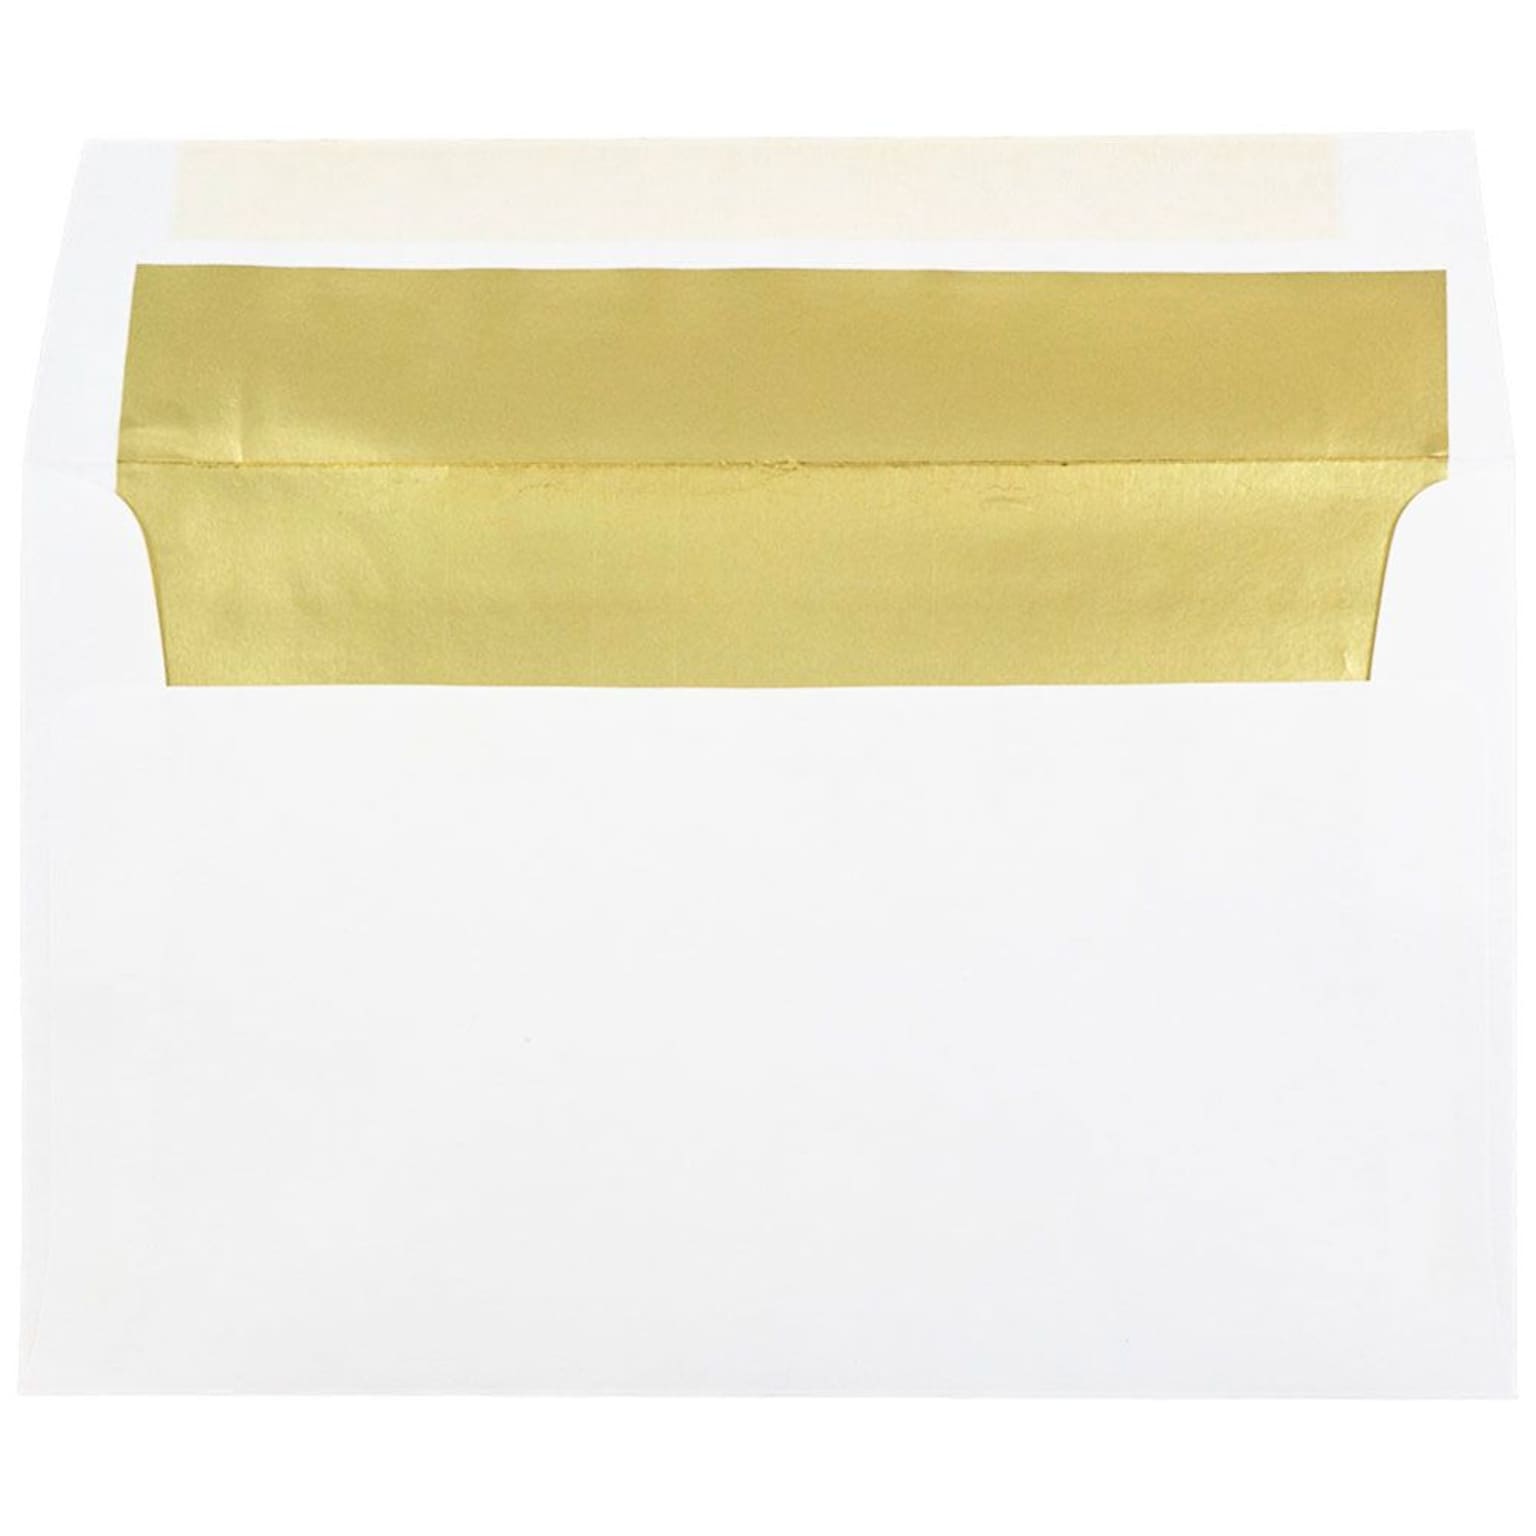 JAM Paper A10 Foil Lined Invitation Envelopes, 6 x 9.5, White with Gold Foil, Bulk 250/Box (900905660H)